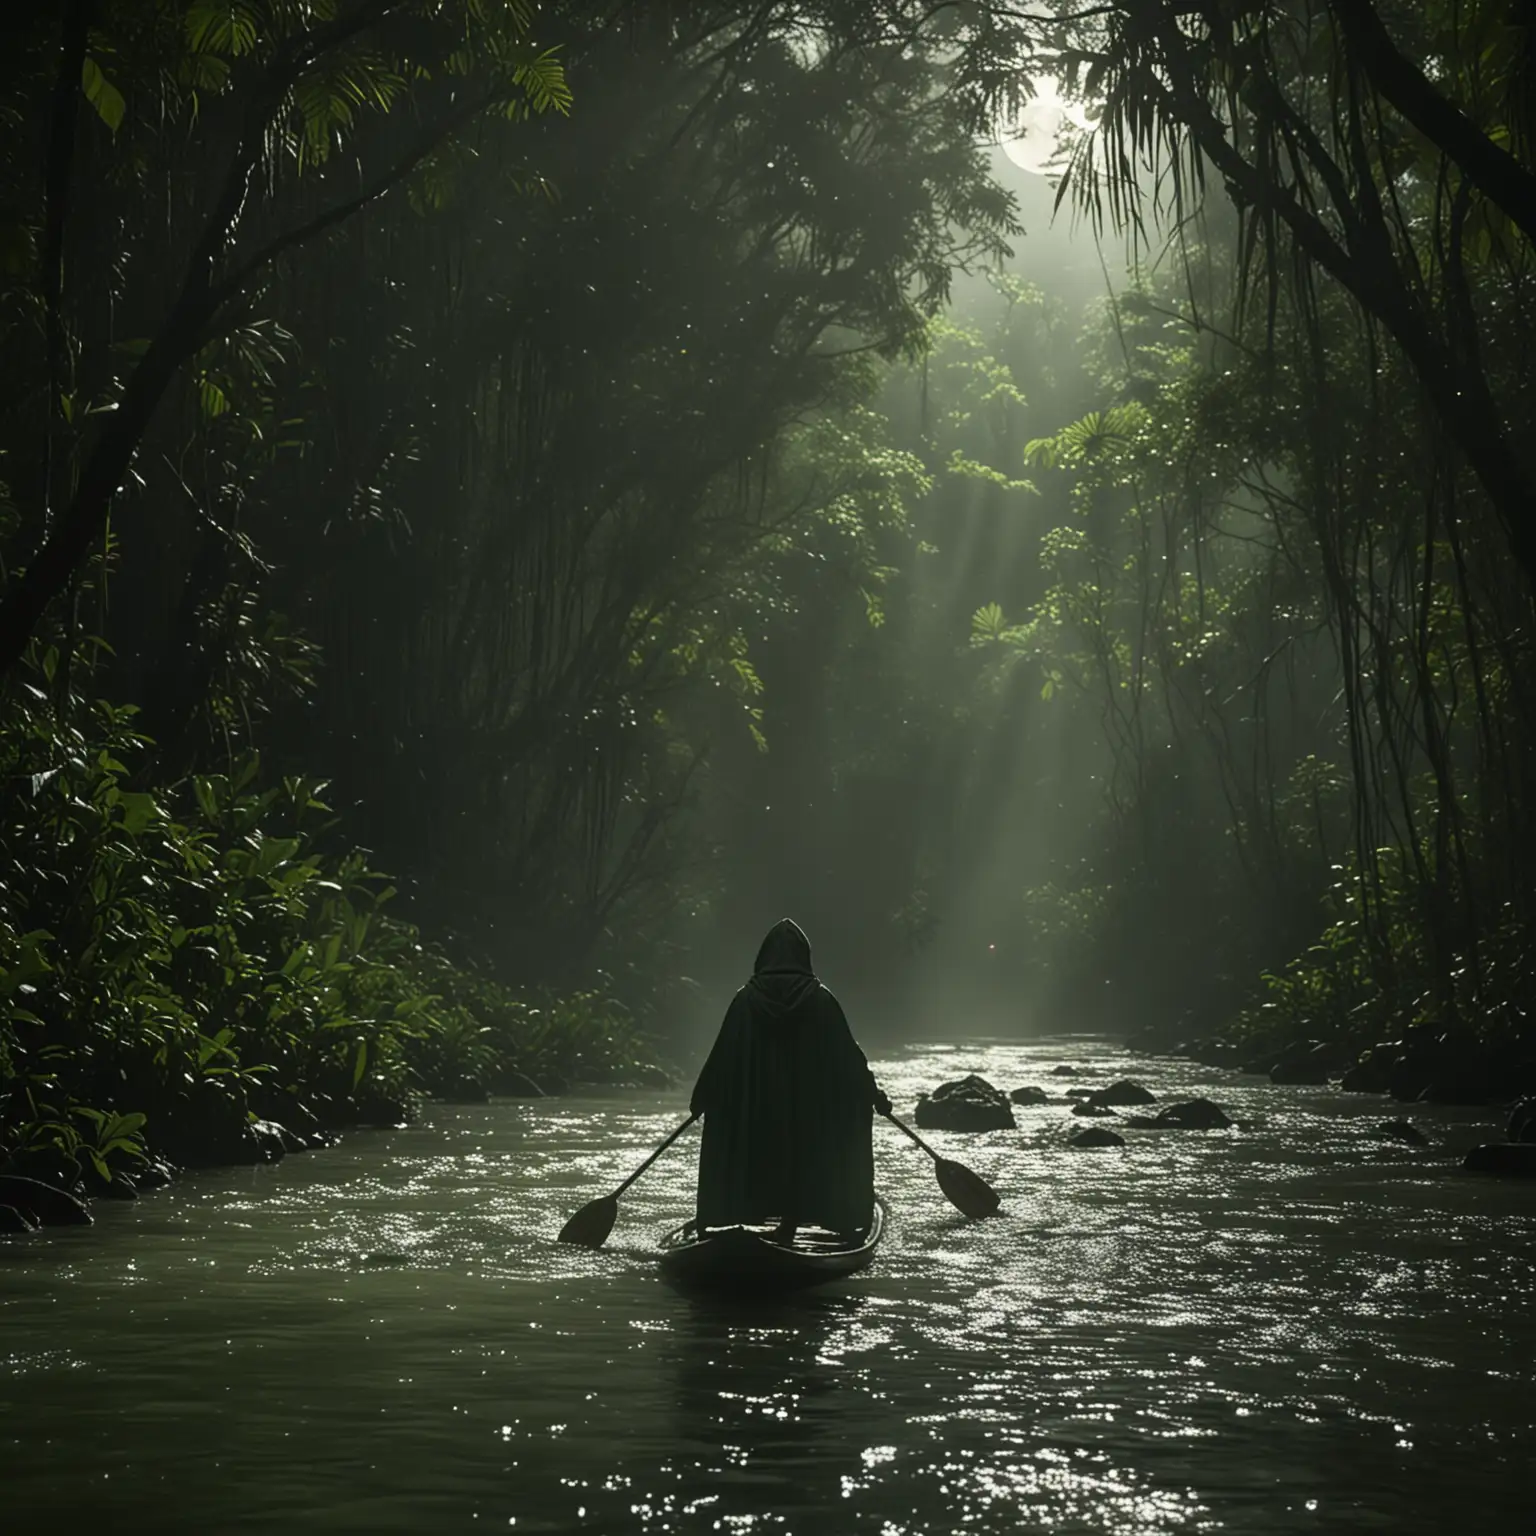 Man Paddling Down River in Jungle at Moonlight